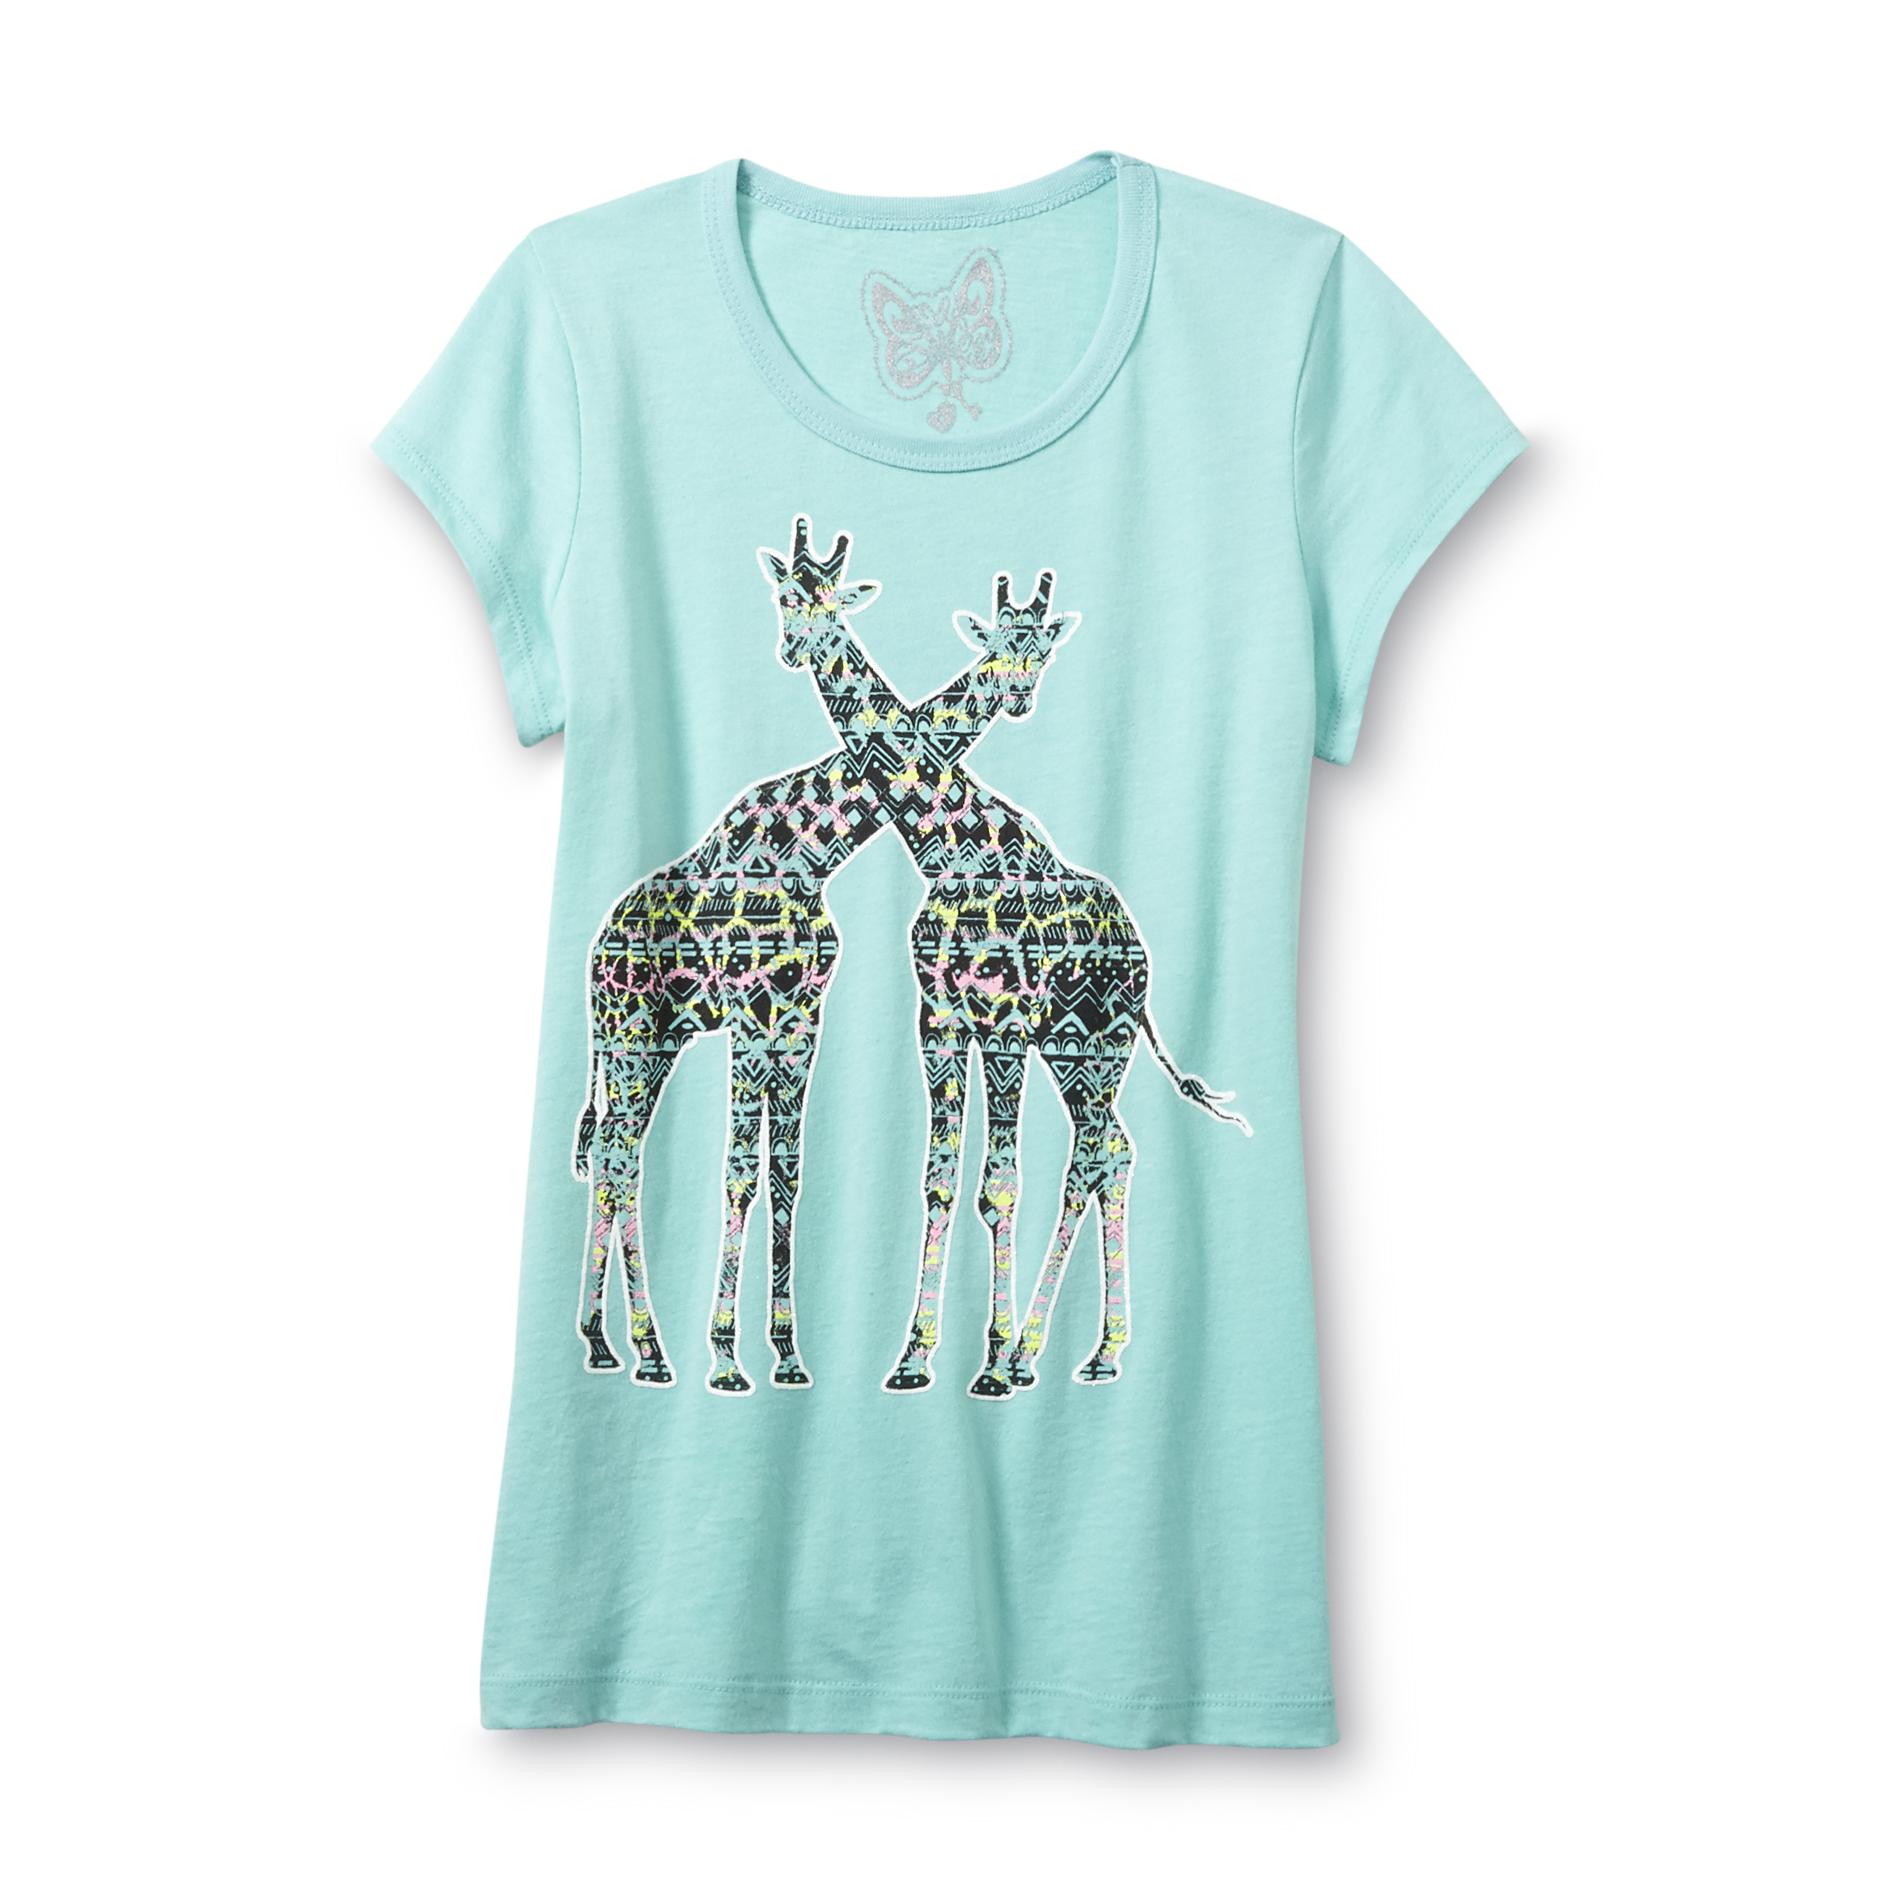 Self Esteem Girl's Graphic T-Shirt - Giraffes